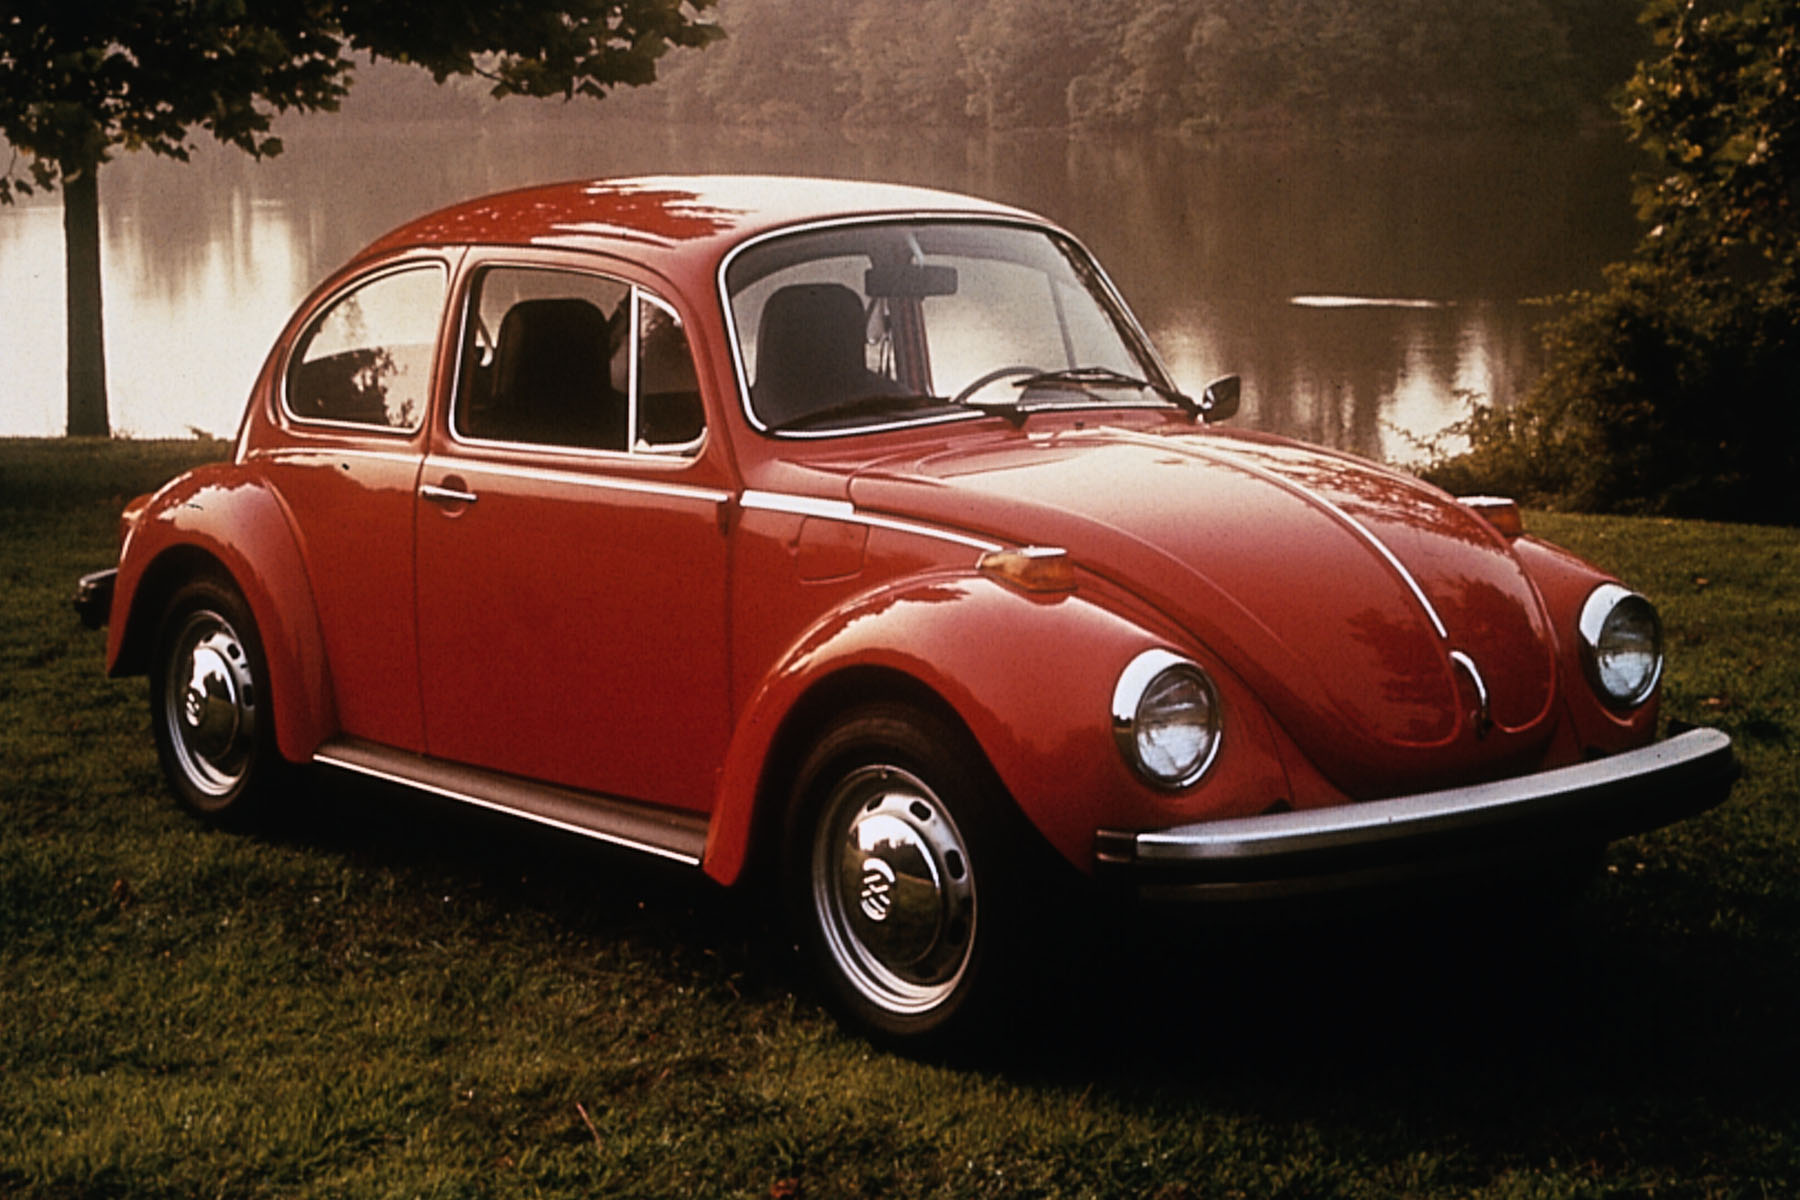 Volkswagen Beetle Image HD Wallpaper And Background